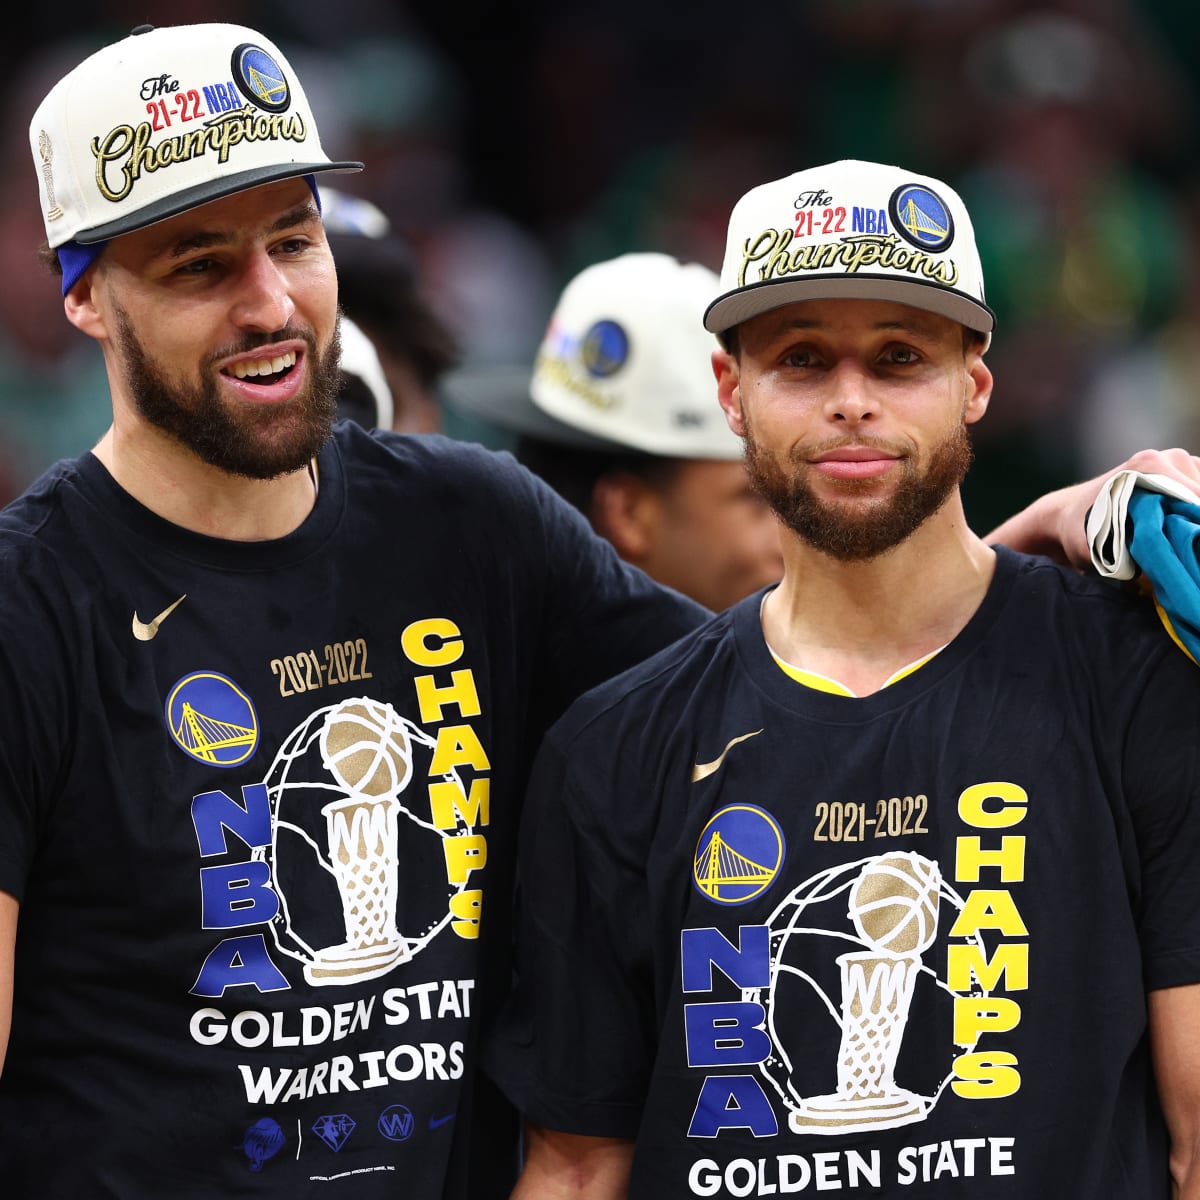 Golden State Warriors 2022 NBA Finals Champions Celebration Parade